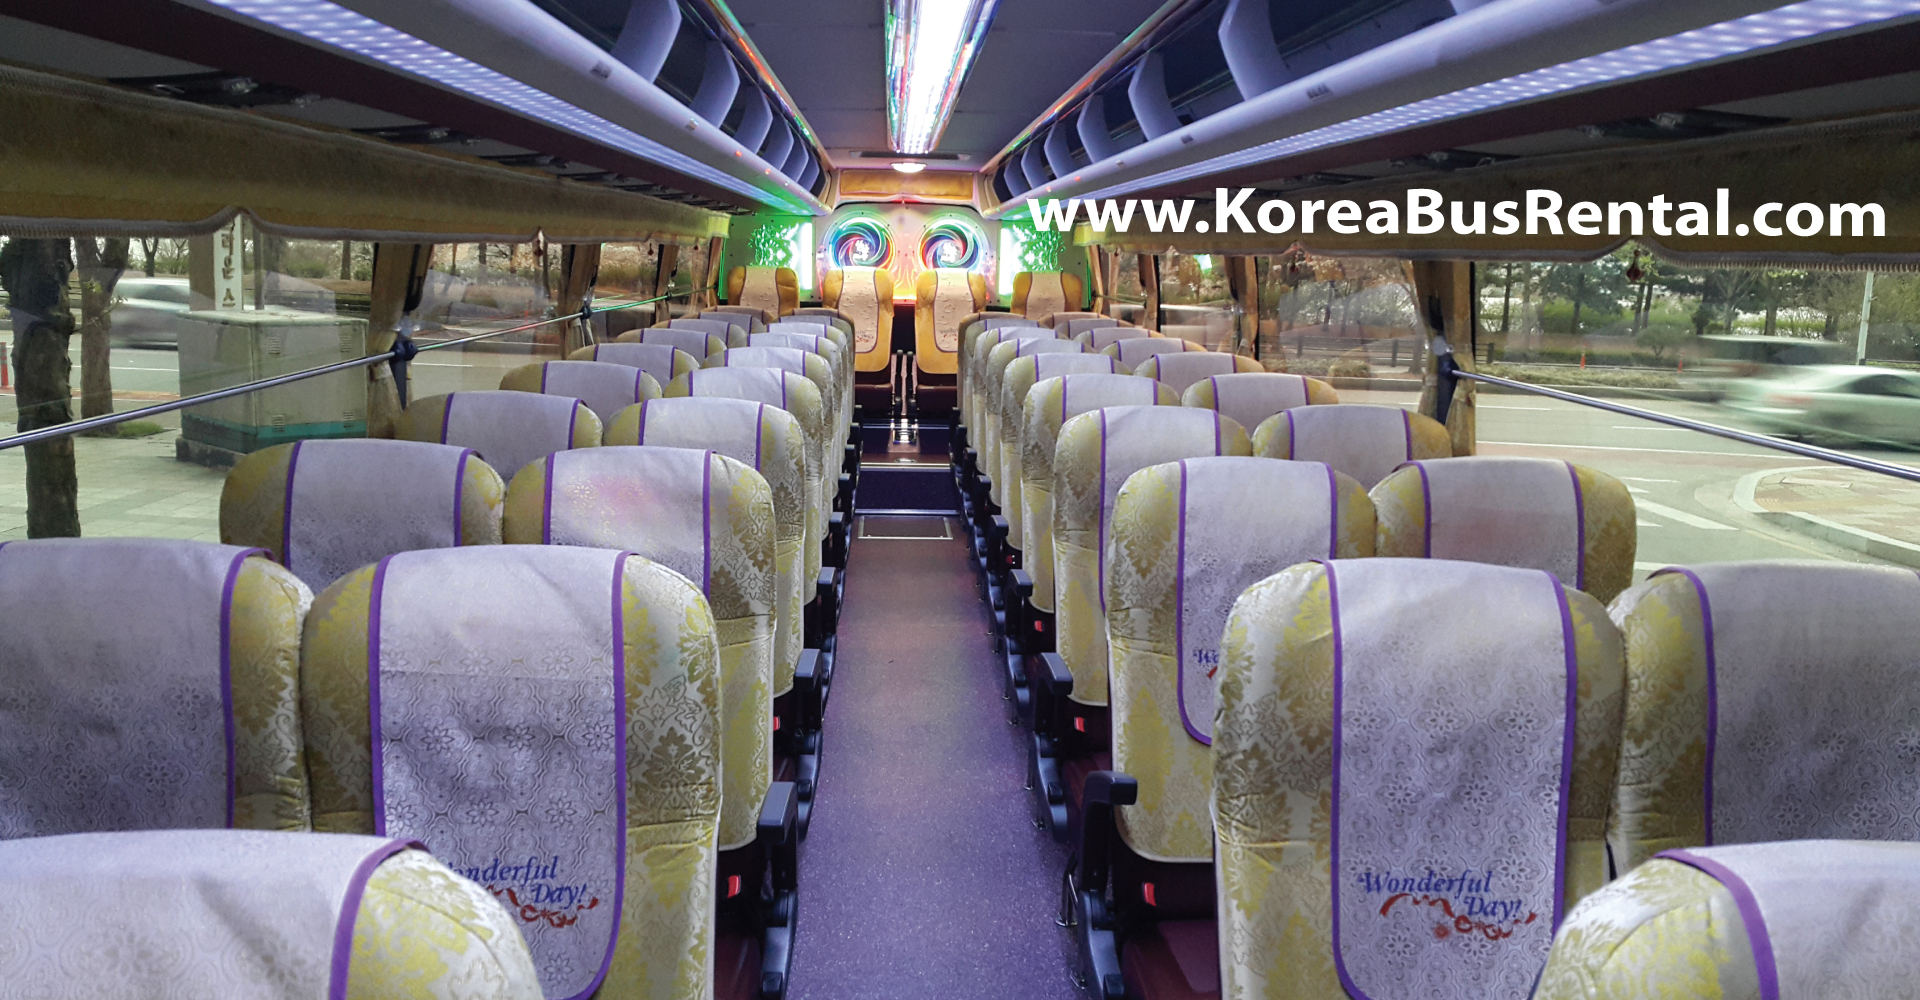 Seoul bus rental